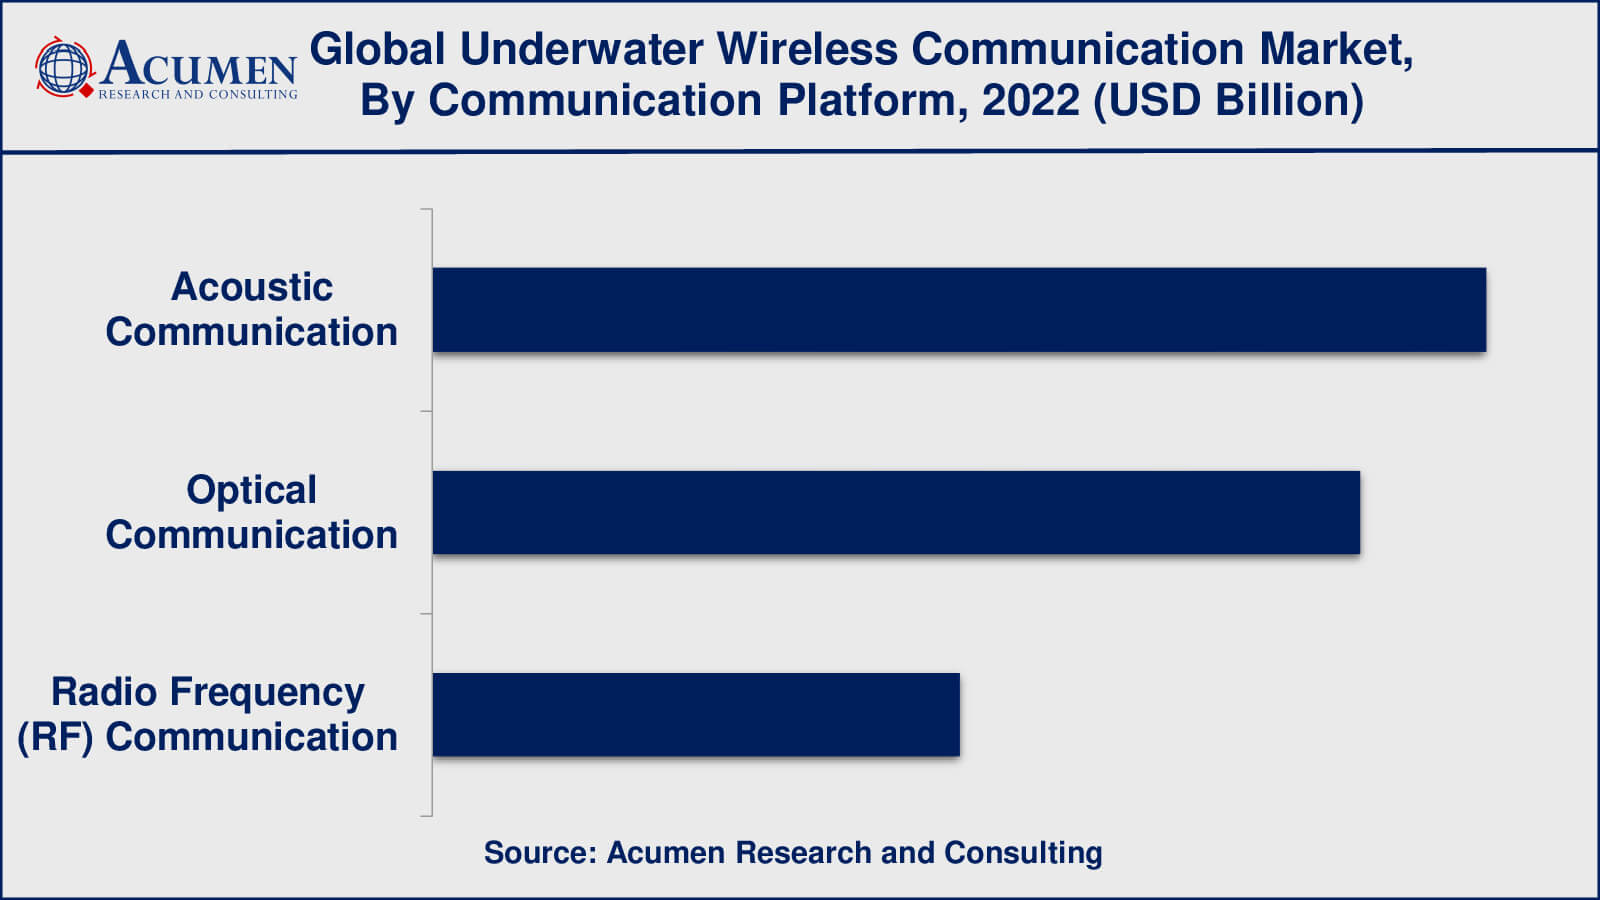 Underwater Wireless Communication Market Drivers